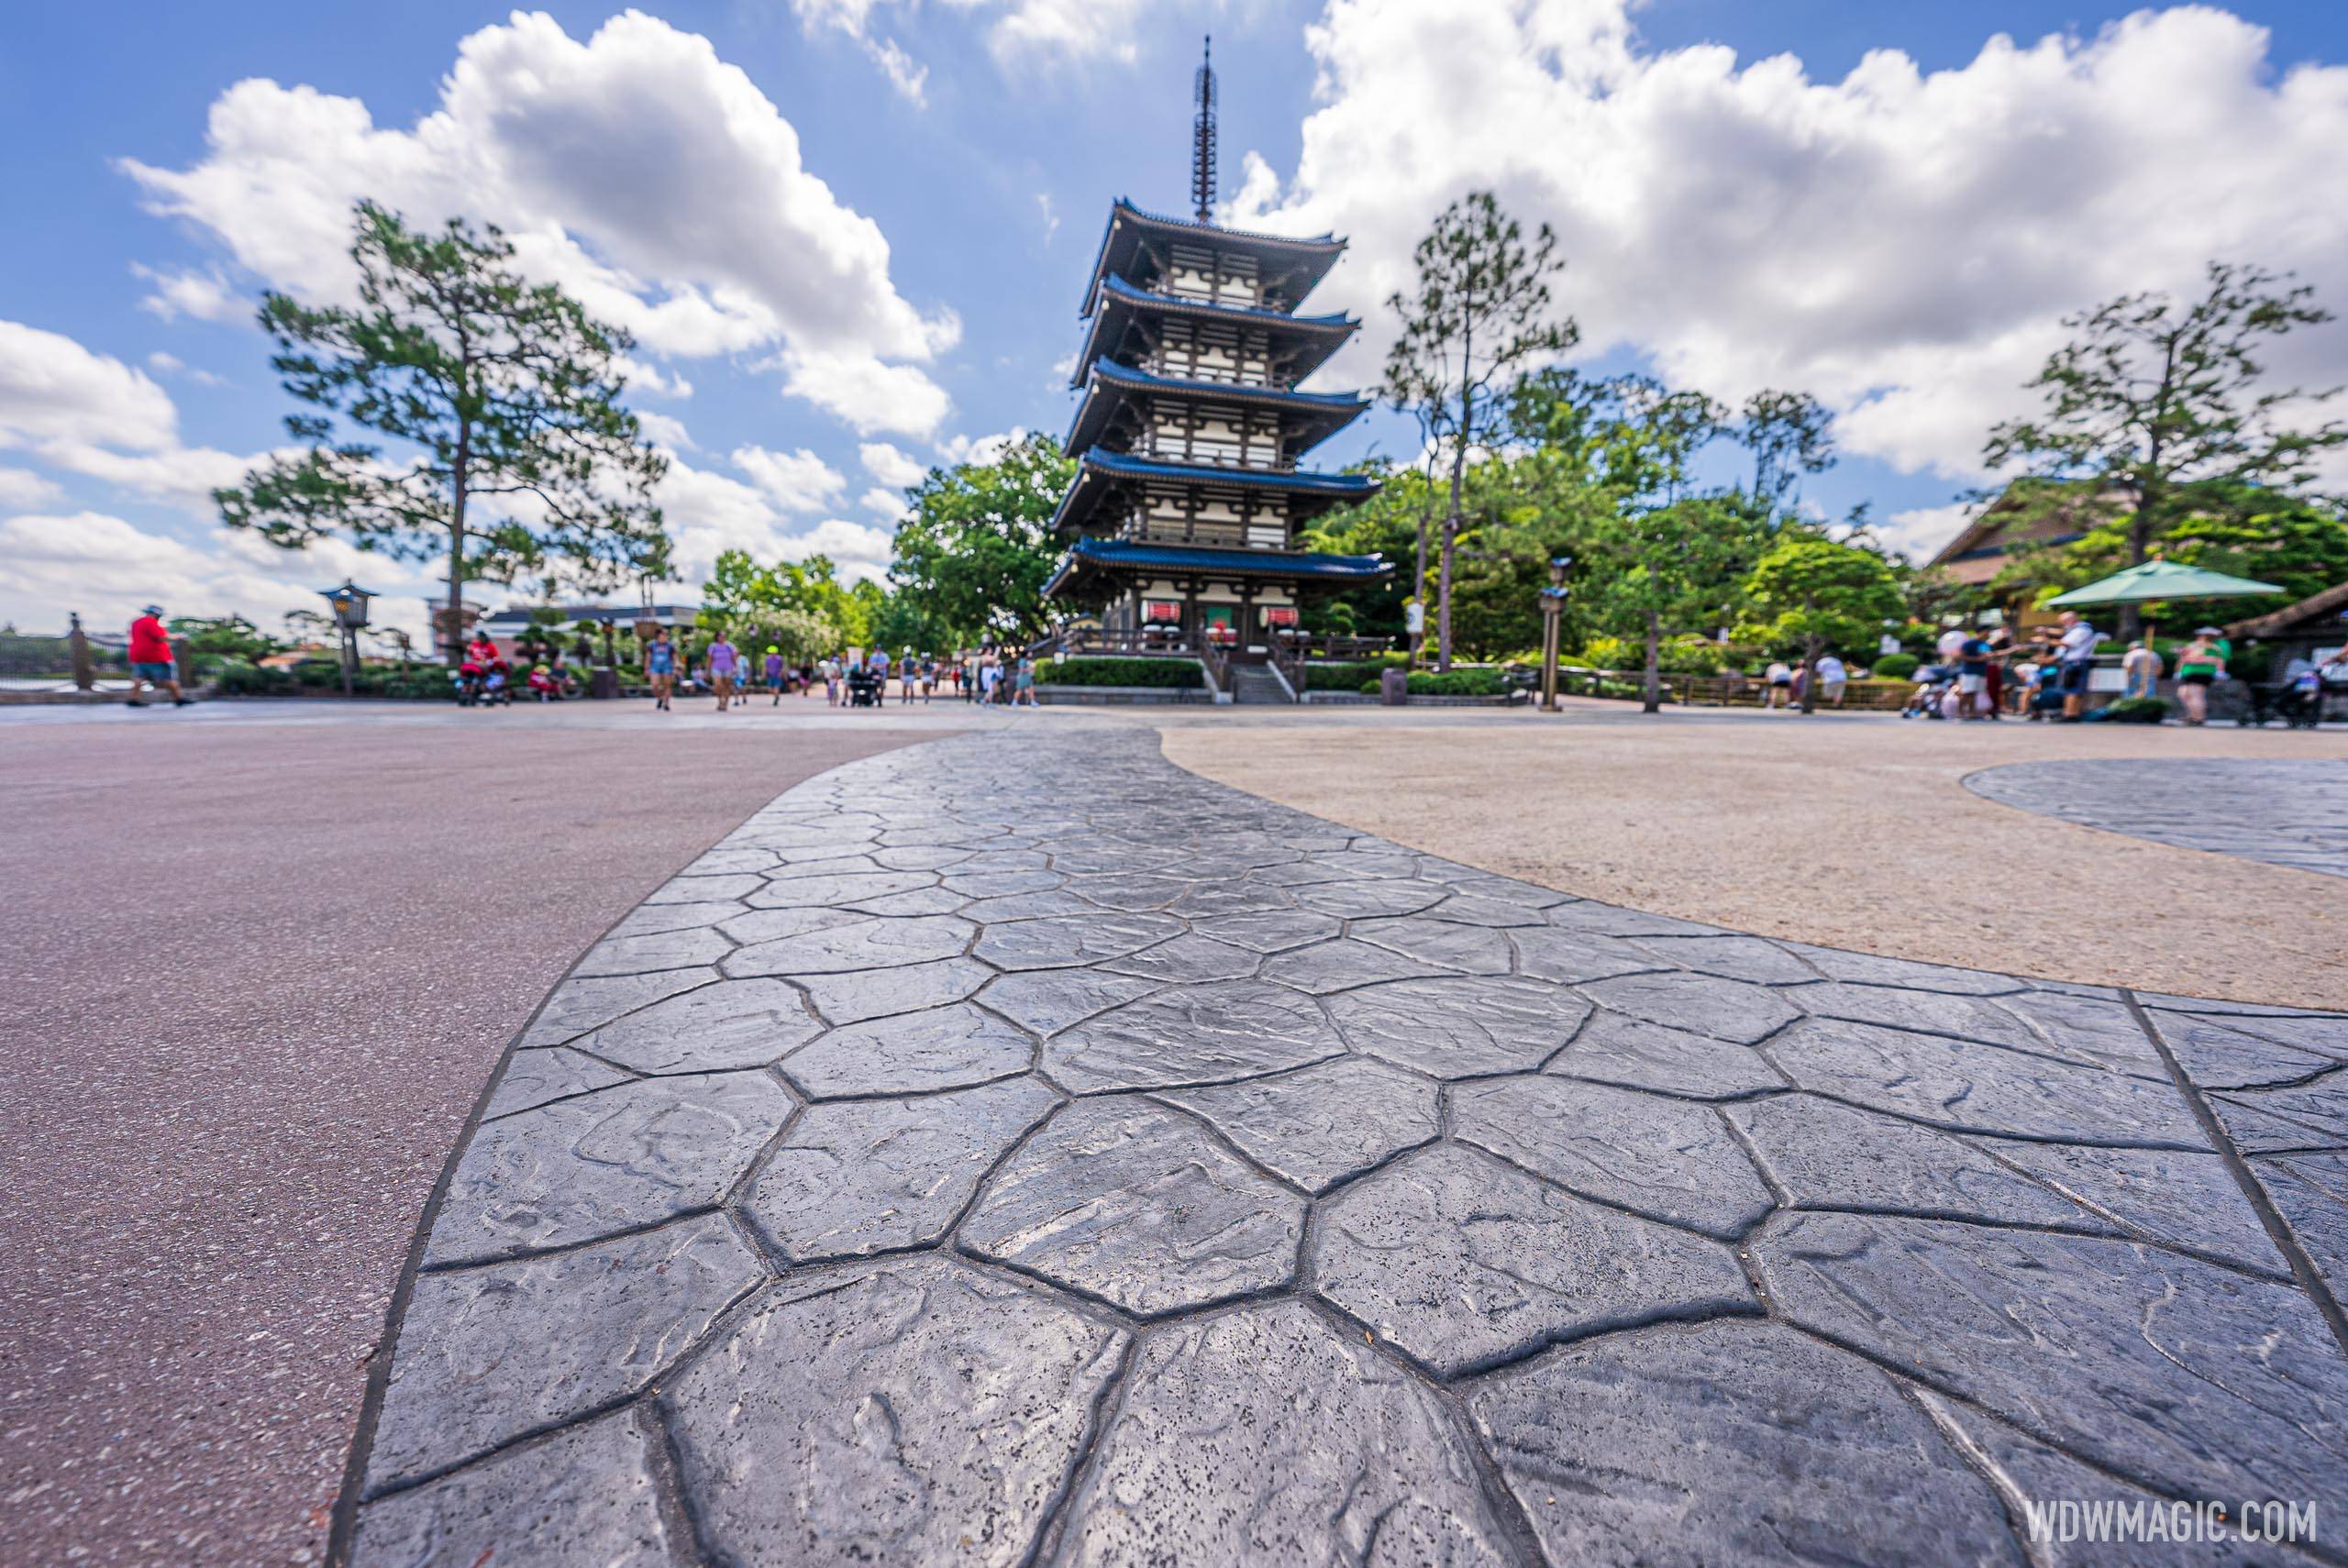 Improvements continue along the promenade at EPCOT's Japan pavilion